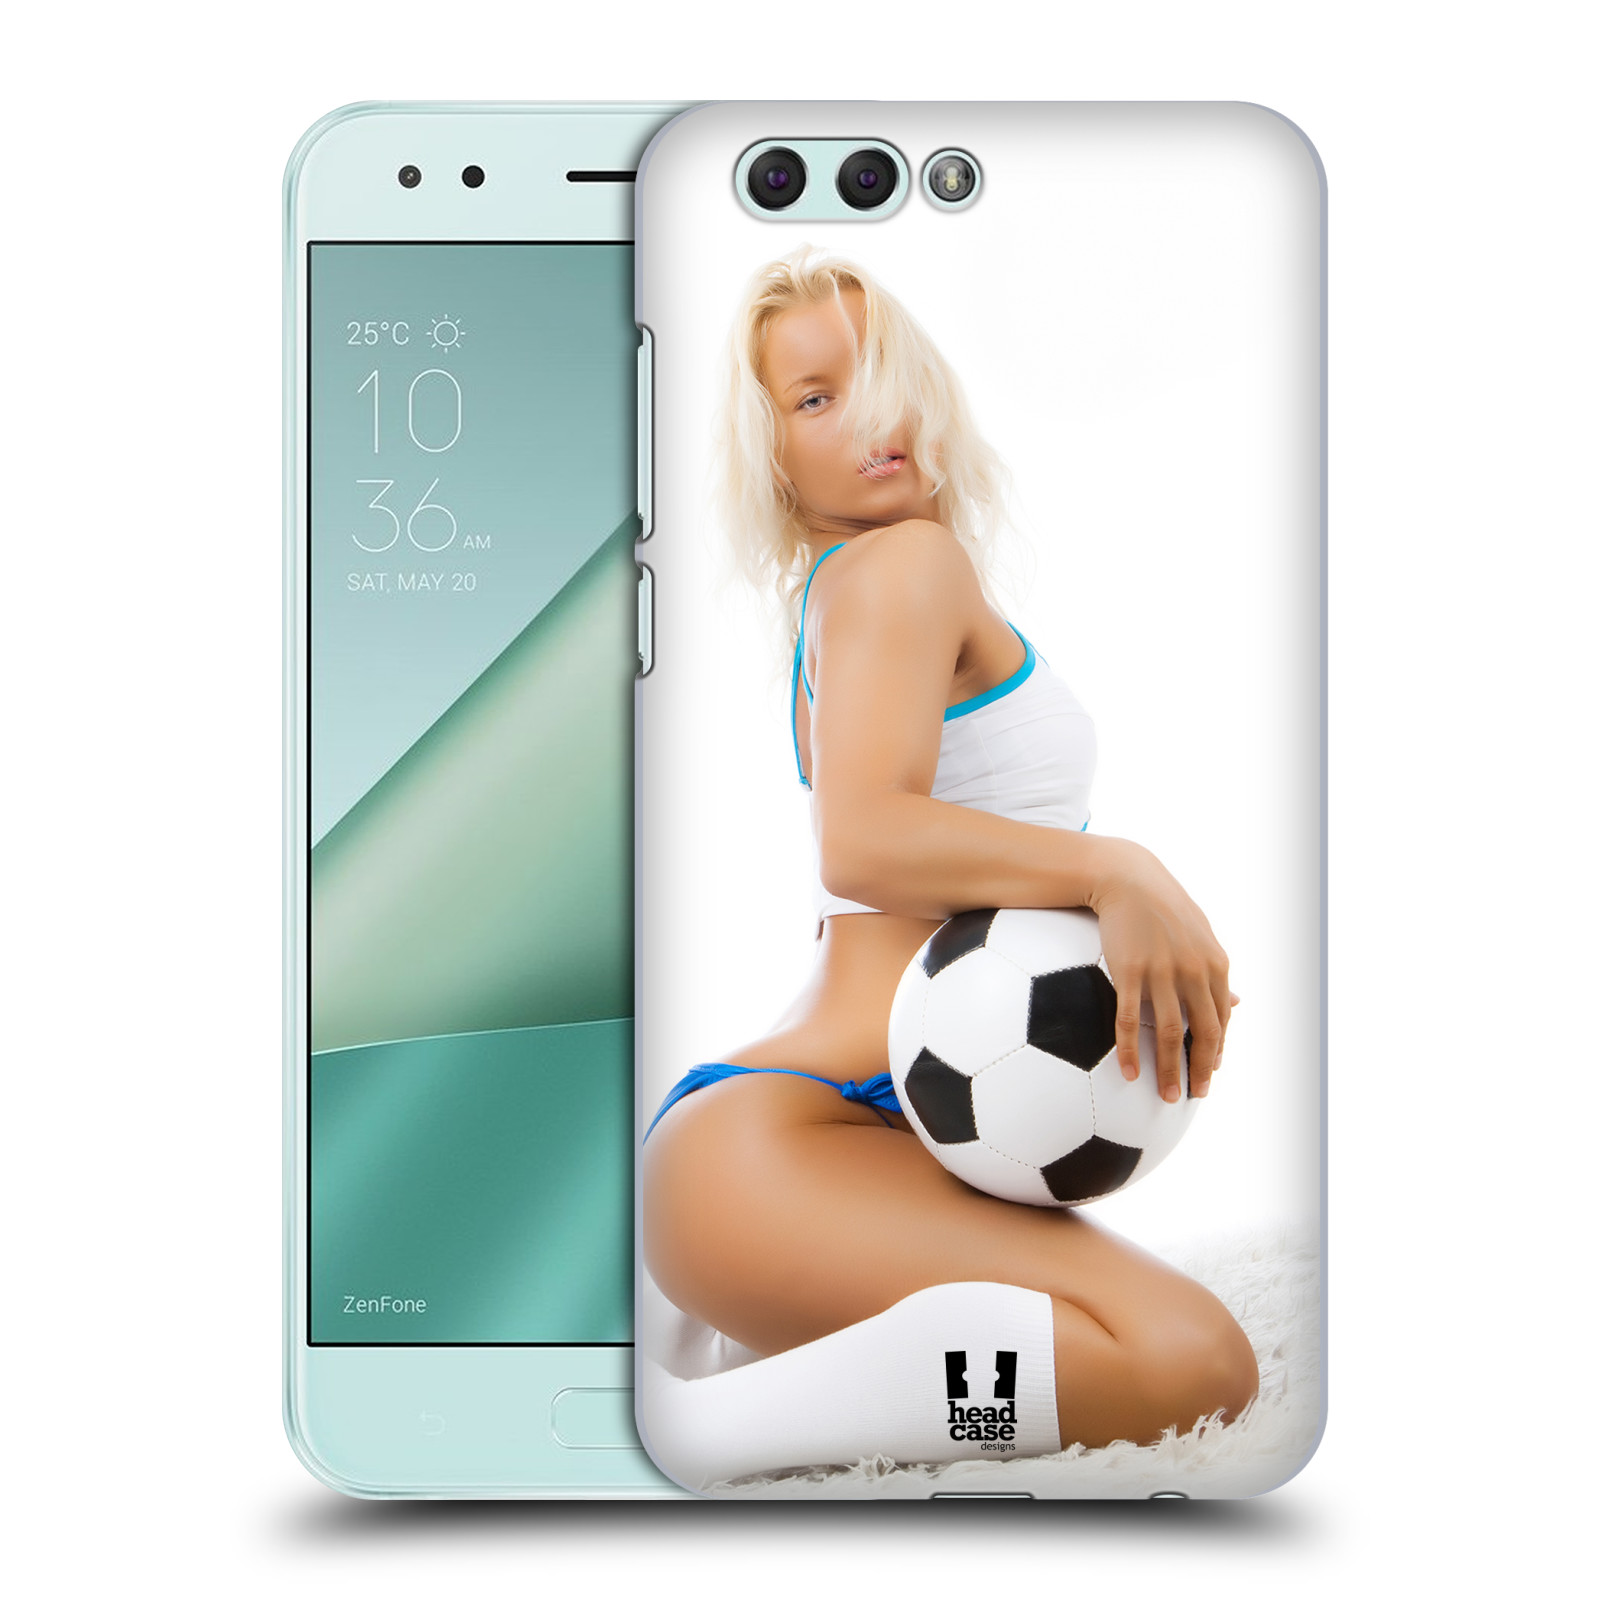 HEAD CASE plastový obal na mobil Asus Zenfone 4 ZE554KL vzor Fotbalové modelky BLONDÝNKA